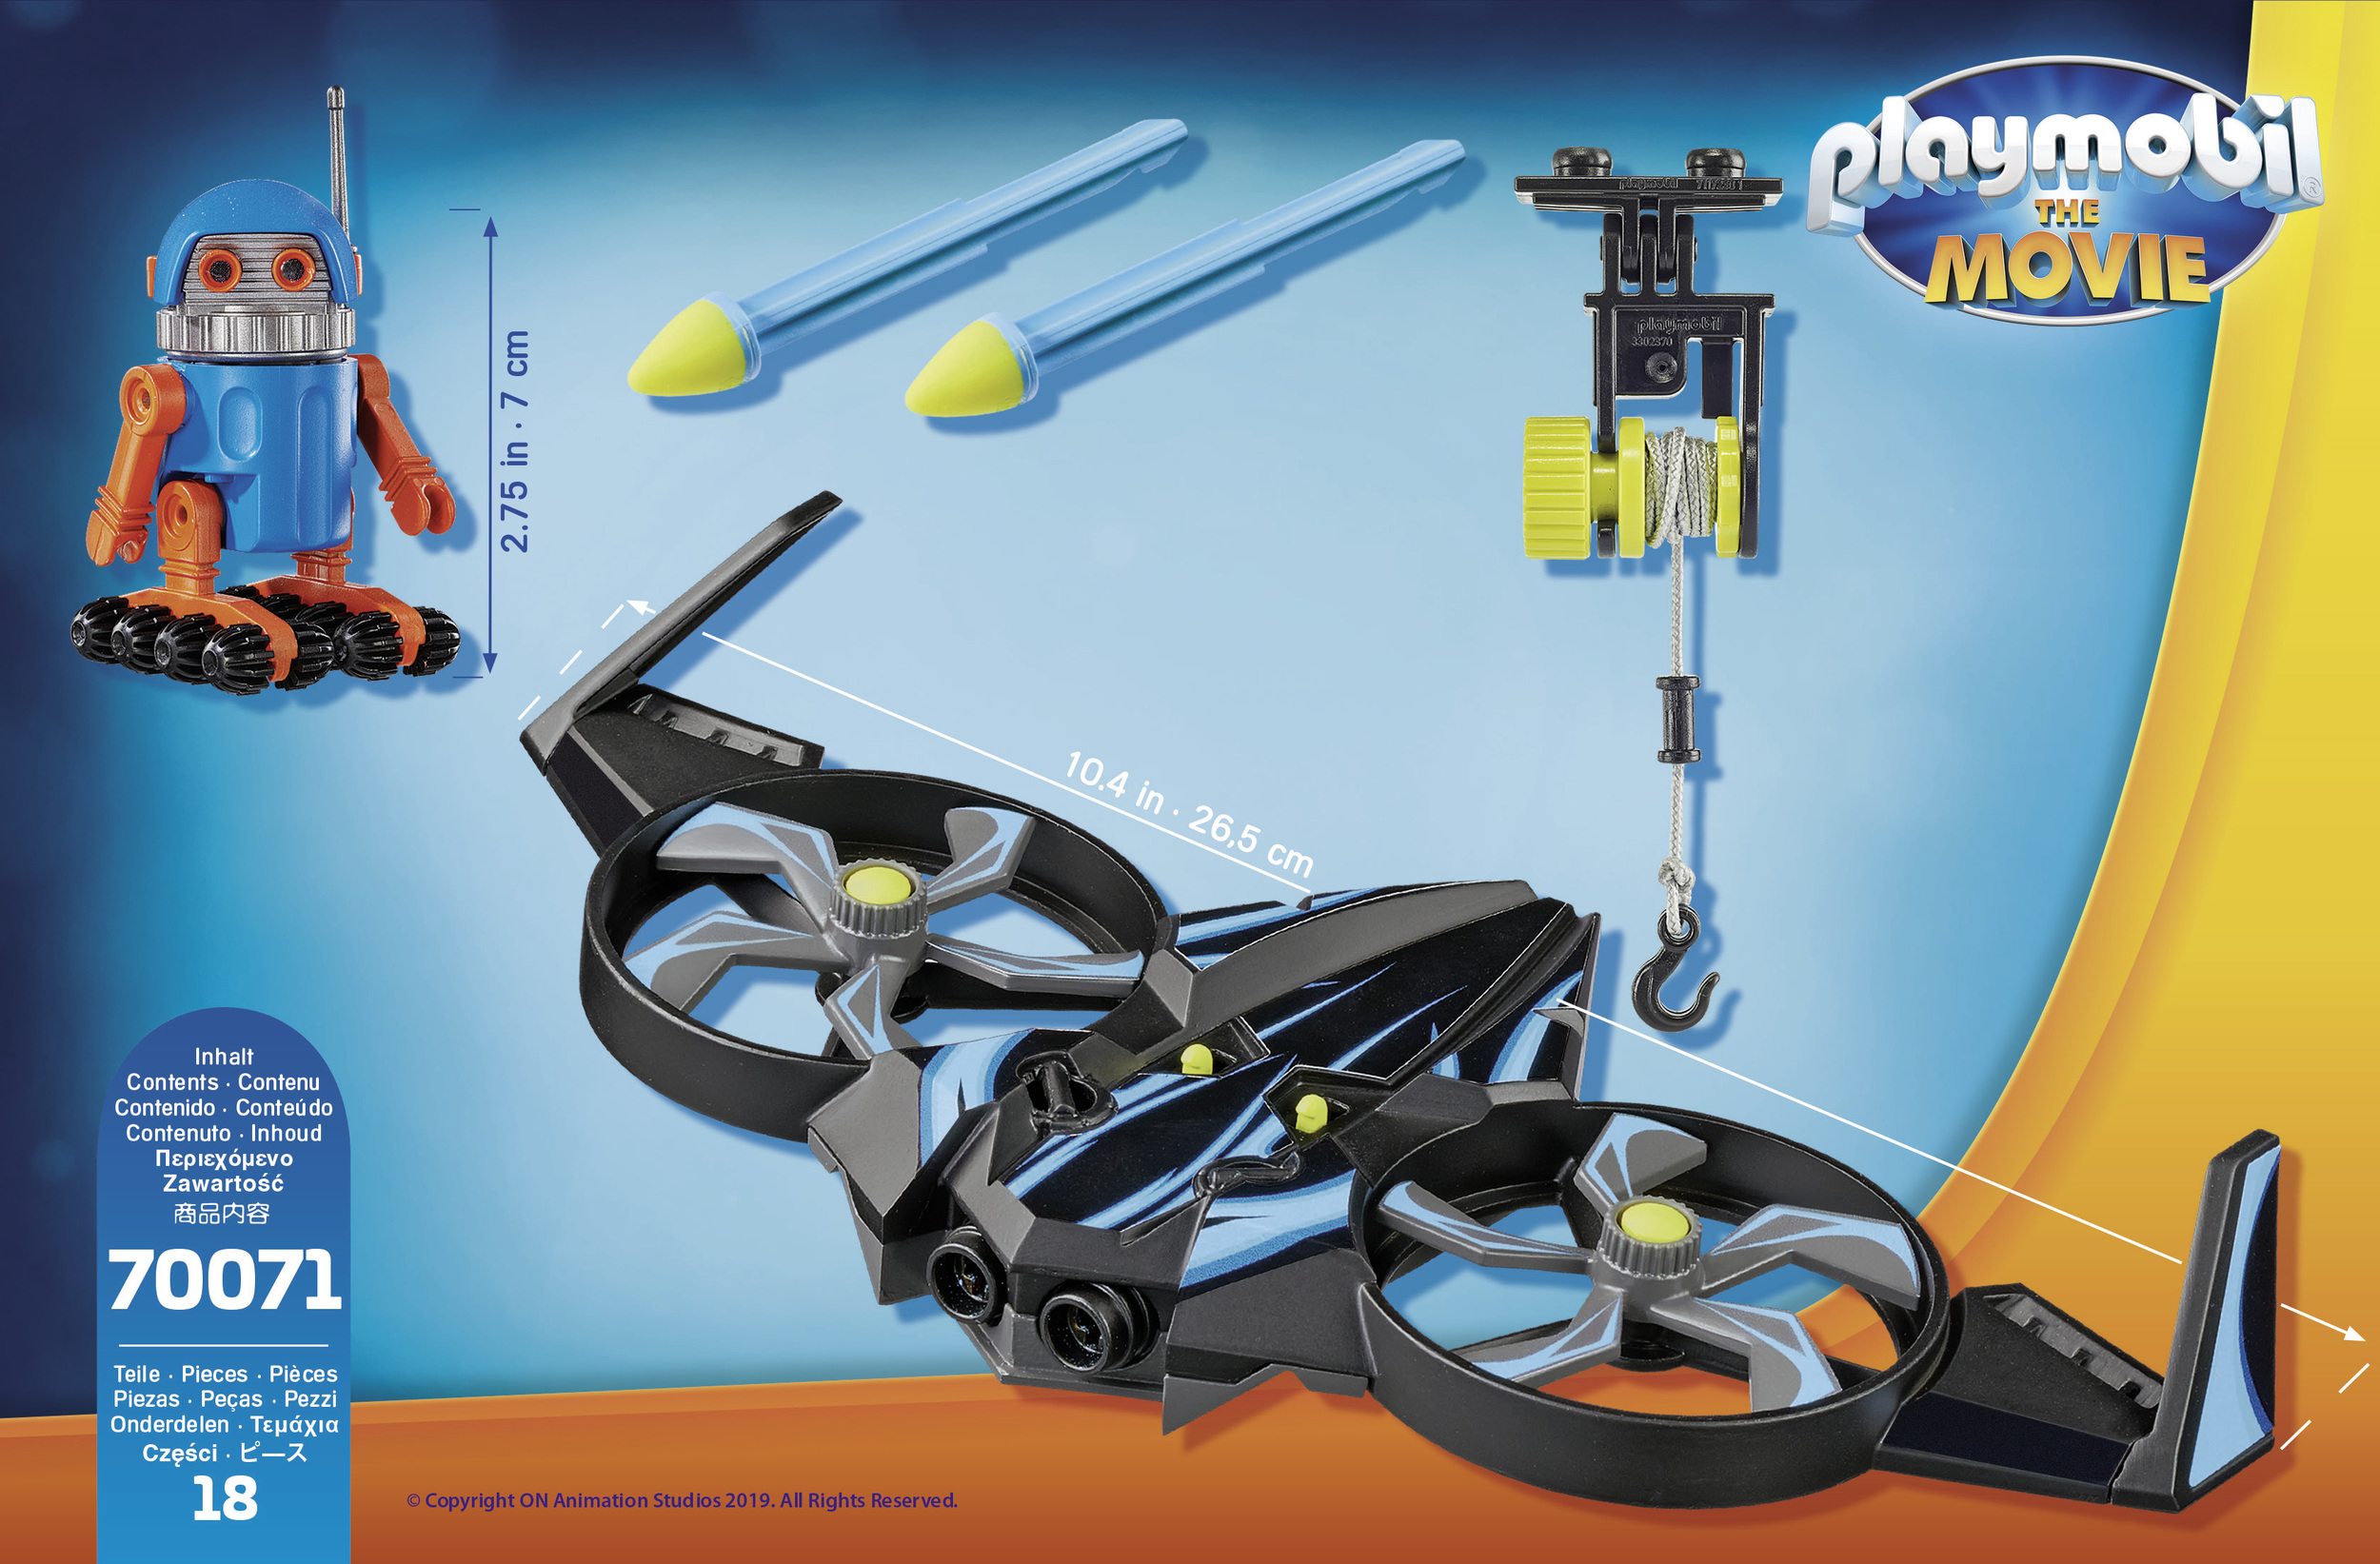 PLAYMOBIL THE MOVIE Robotitron with Drone - image 4 of 5